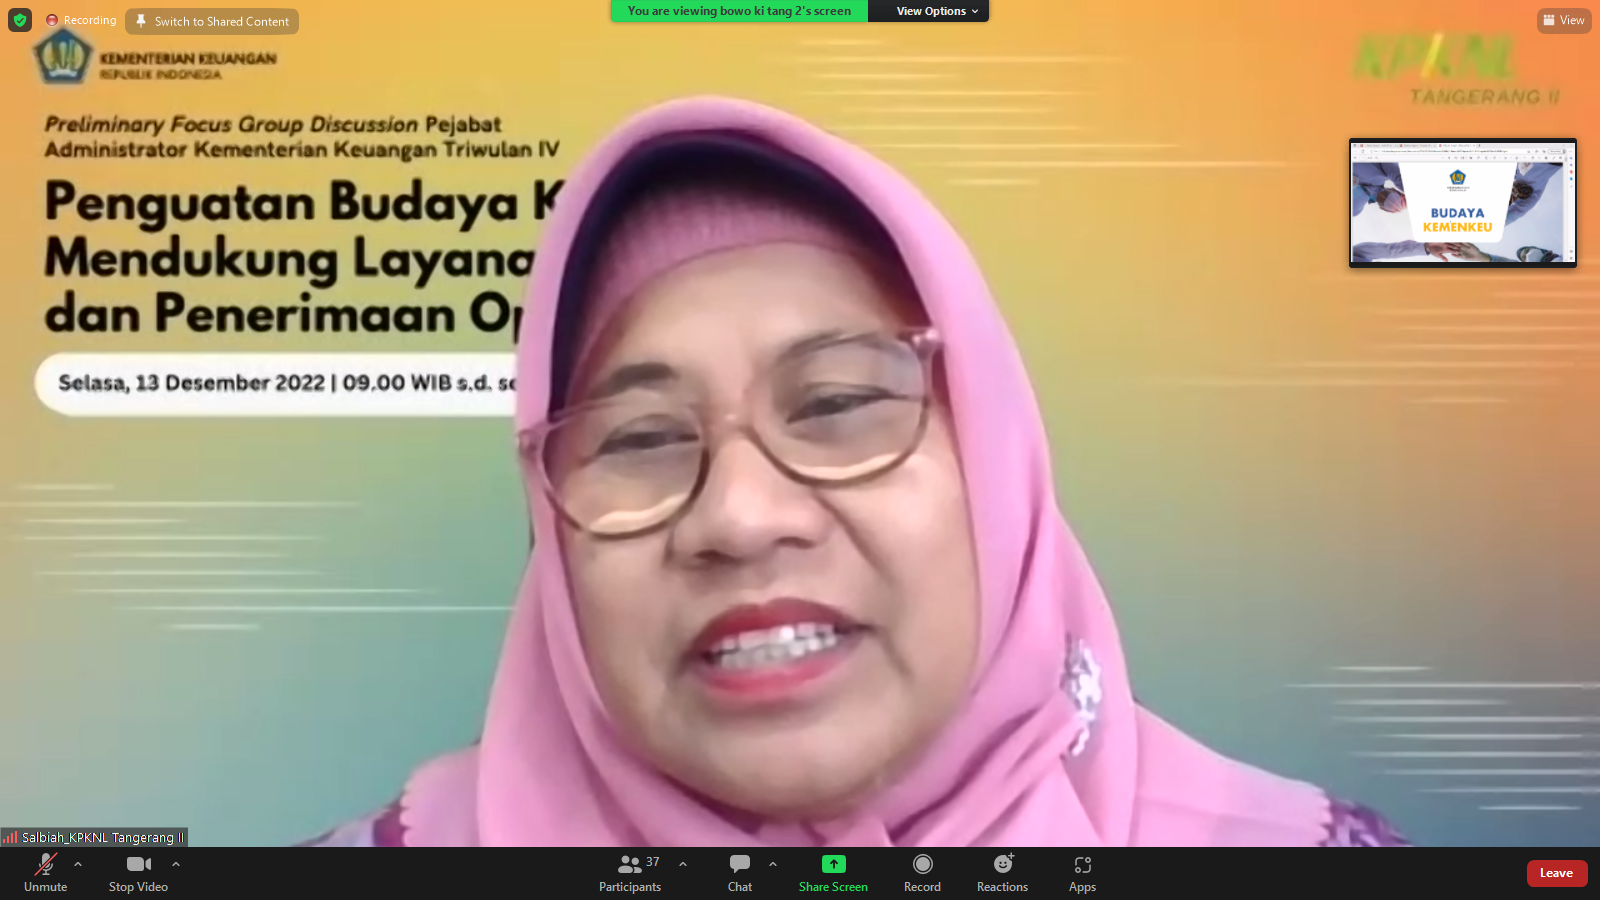 FGD Pejabat Administrator Triwulan IV-2022, Kepala KPKNL Tangerang II Jelaskan Pentingnya Penguatan Budaya Organisasi